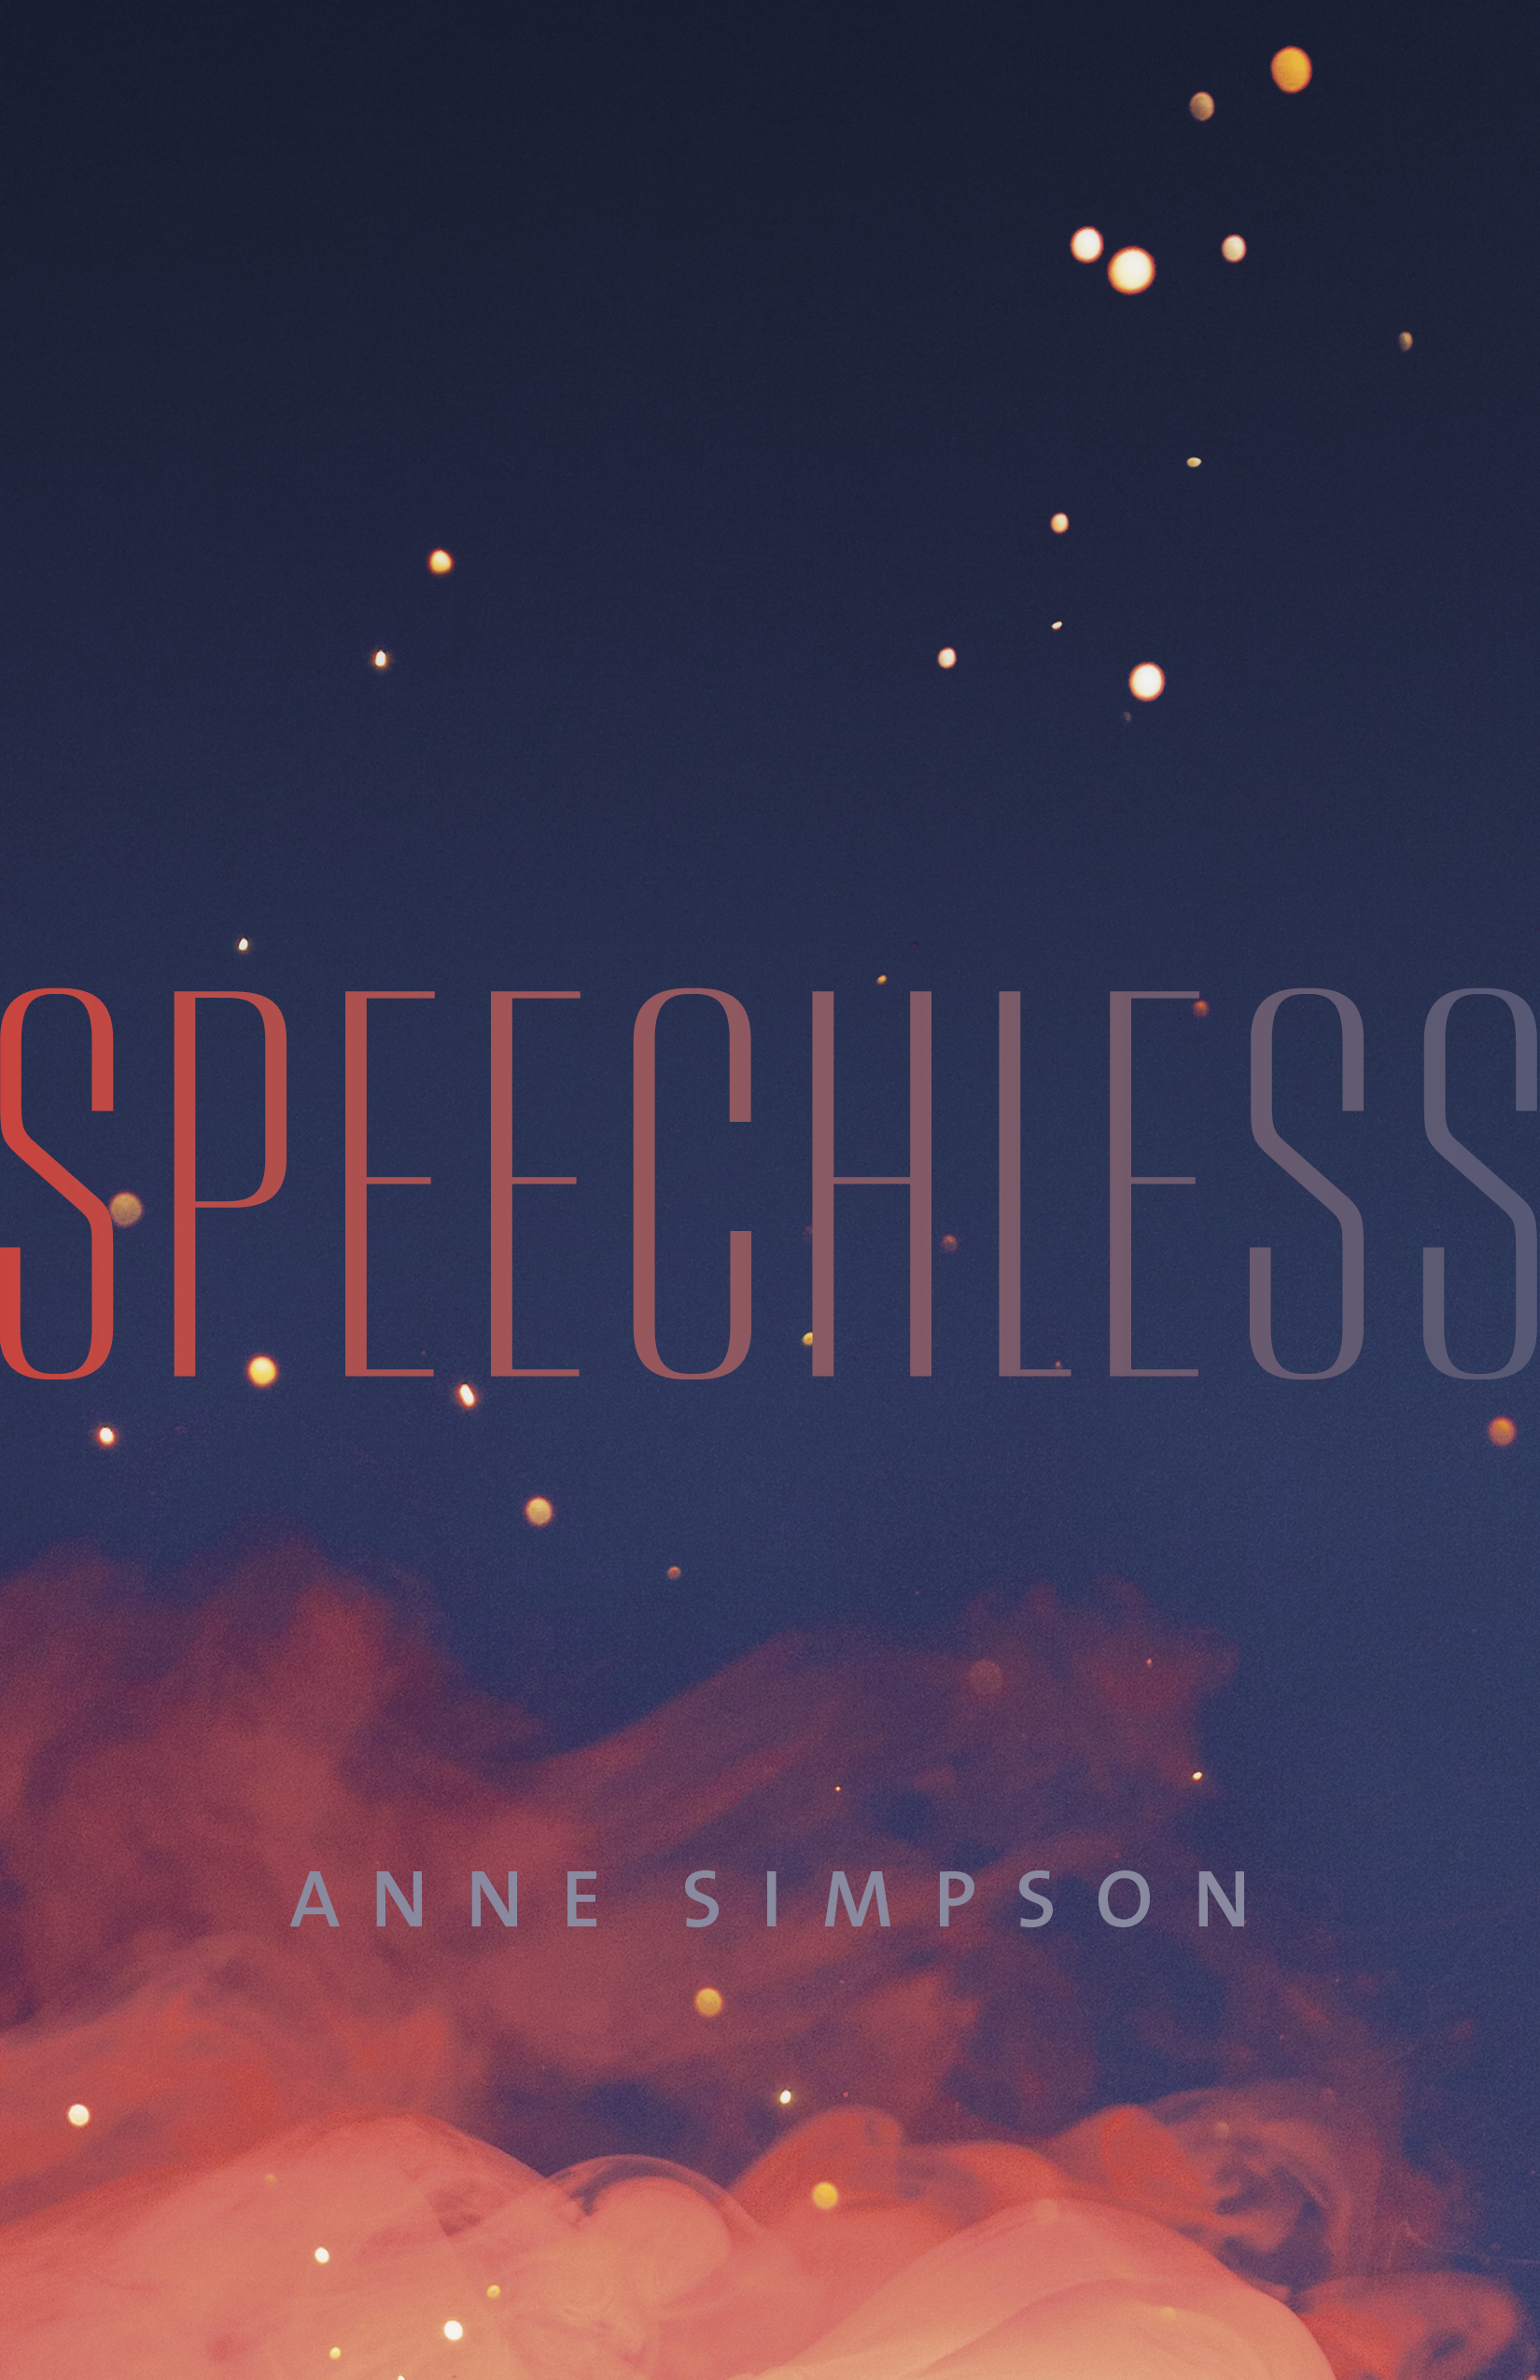 Speechless: A Novel